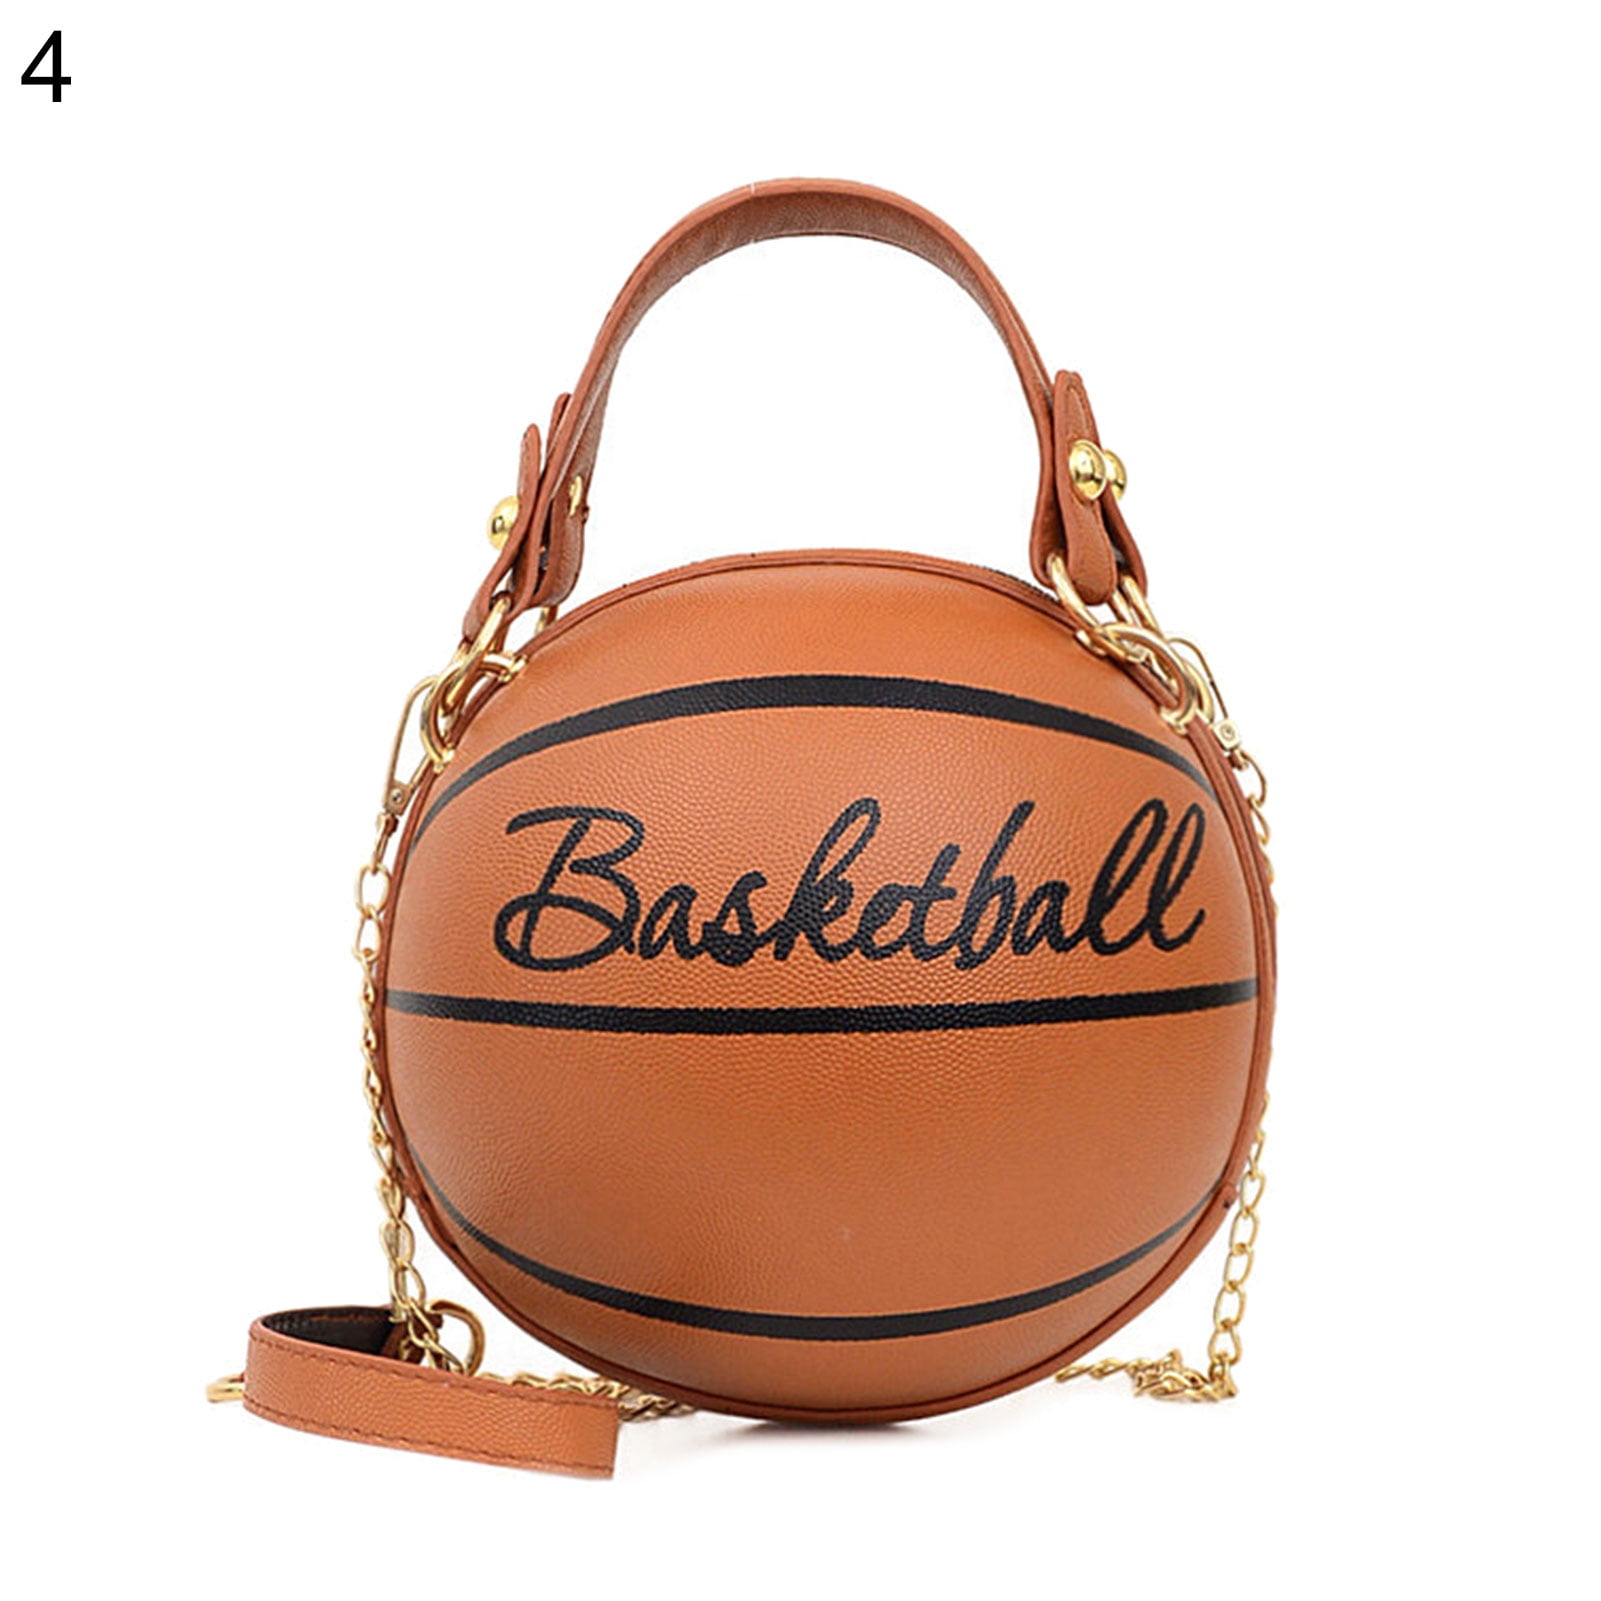 Basketball Shaped Purse For Women Cross Body Handbag Girls Messenger Bag  Tote Shoulder PU Leather Round Handbags 